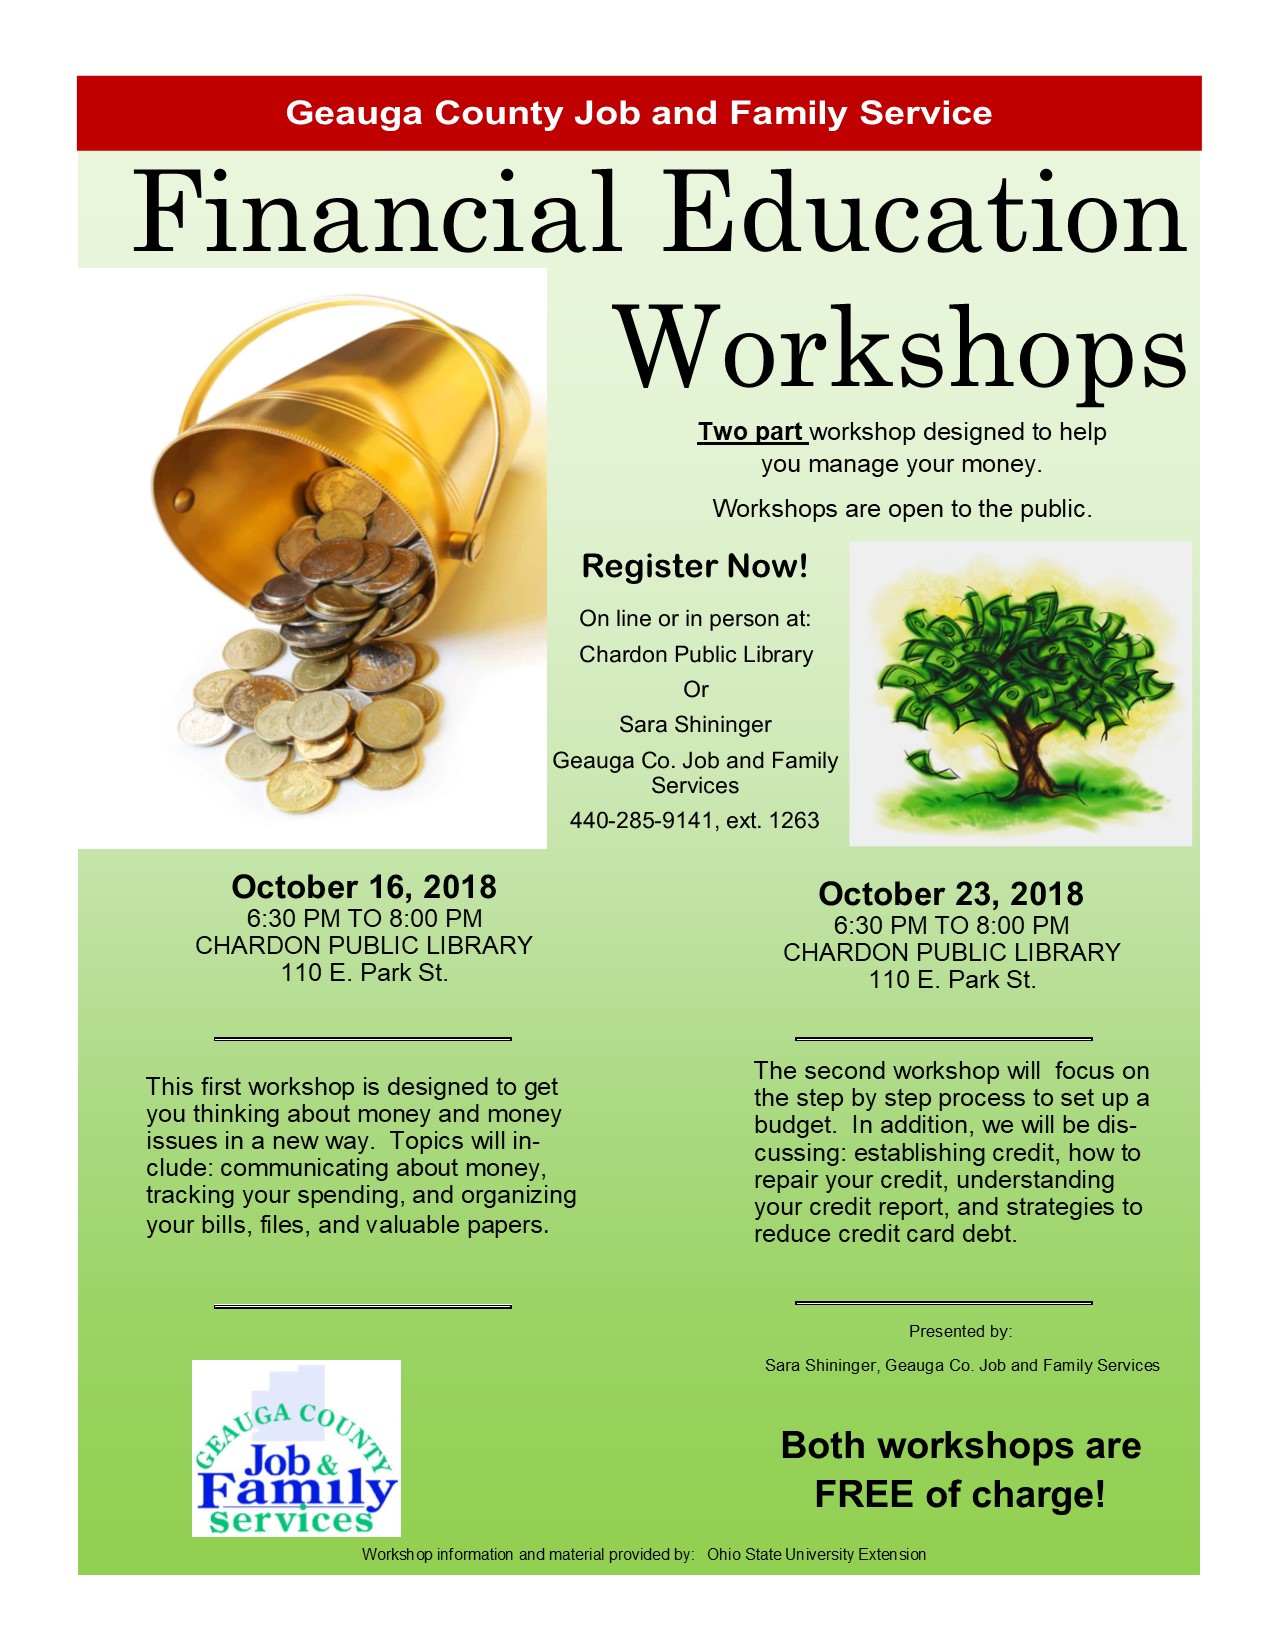 Financial Education Workshop